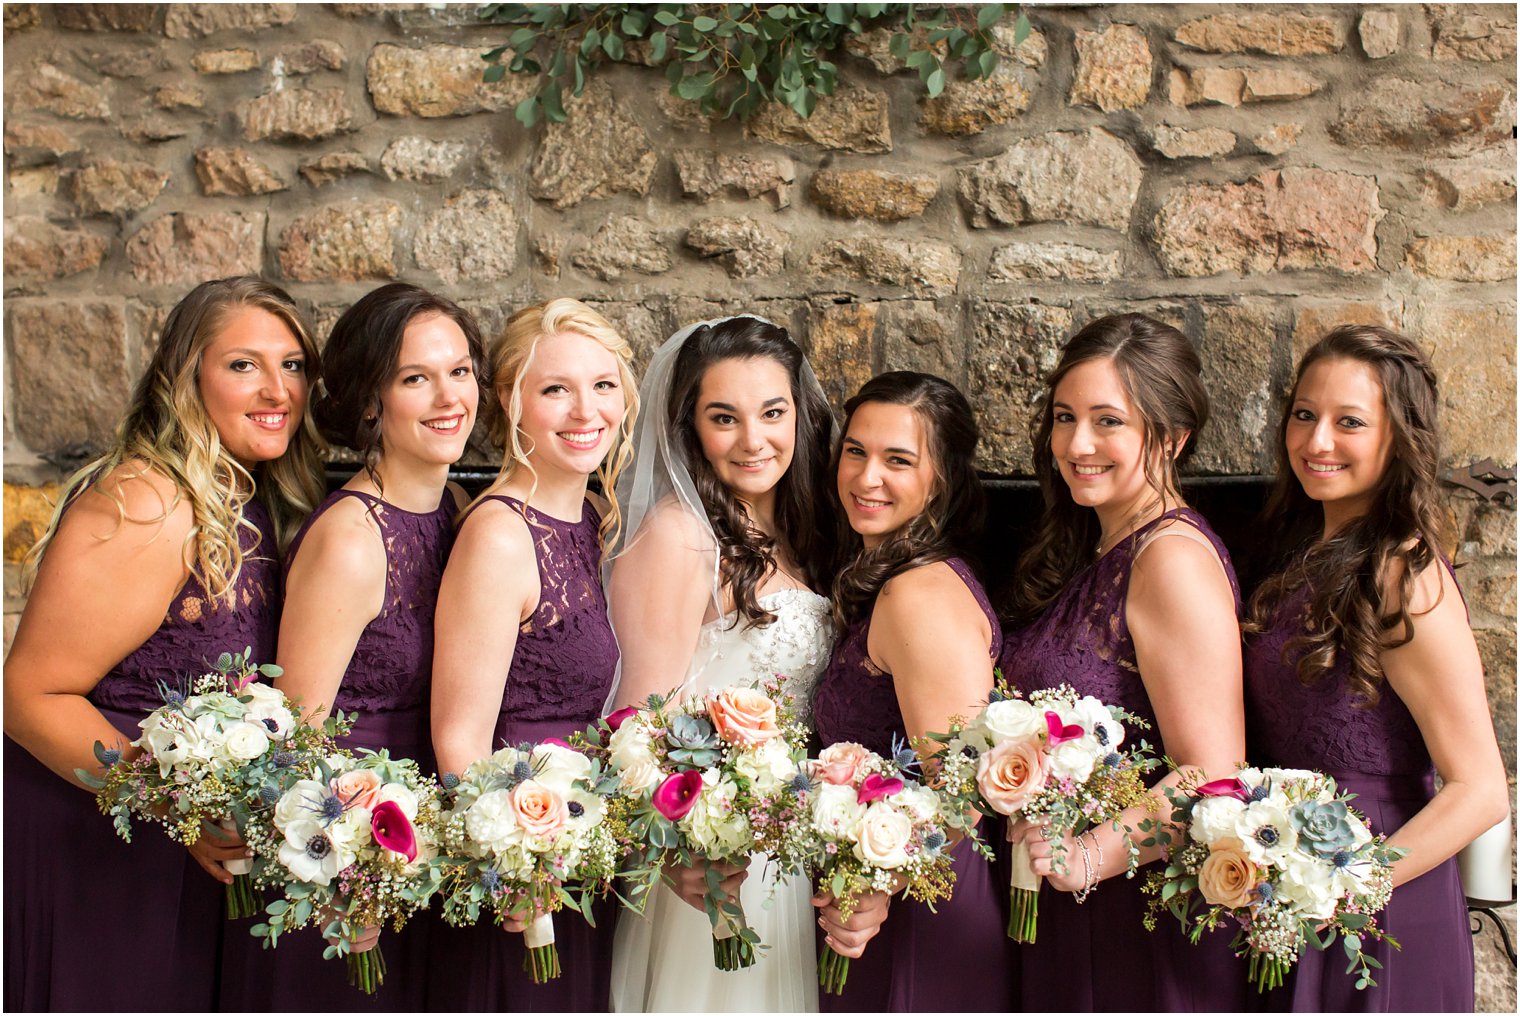 Bride and bridesmaids in purple dresses